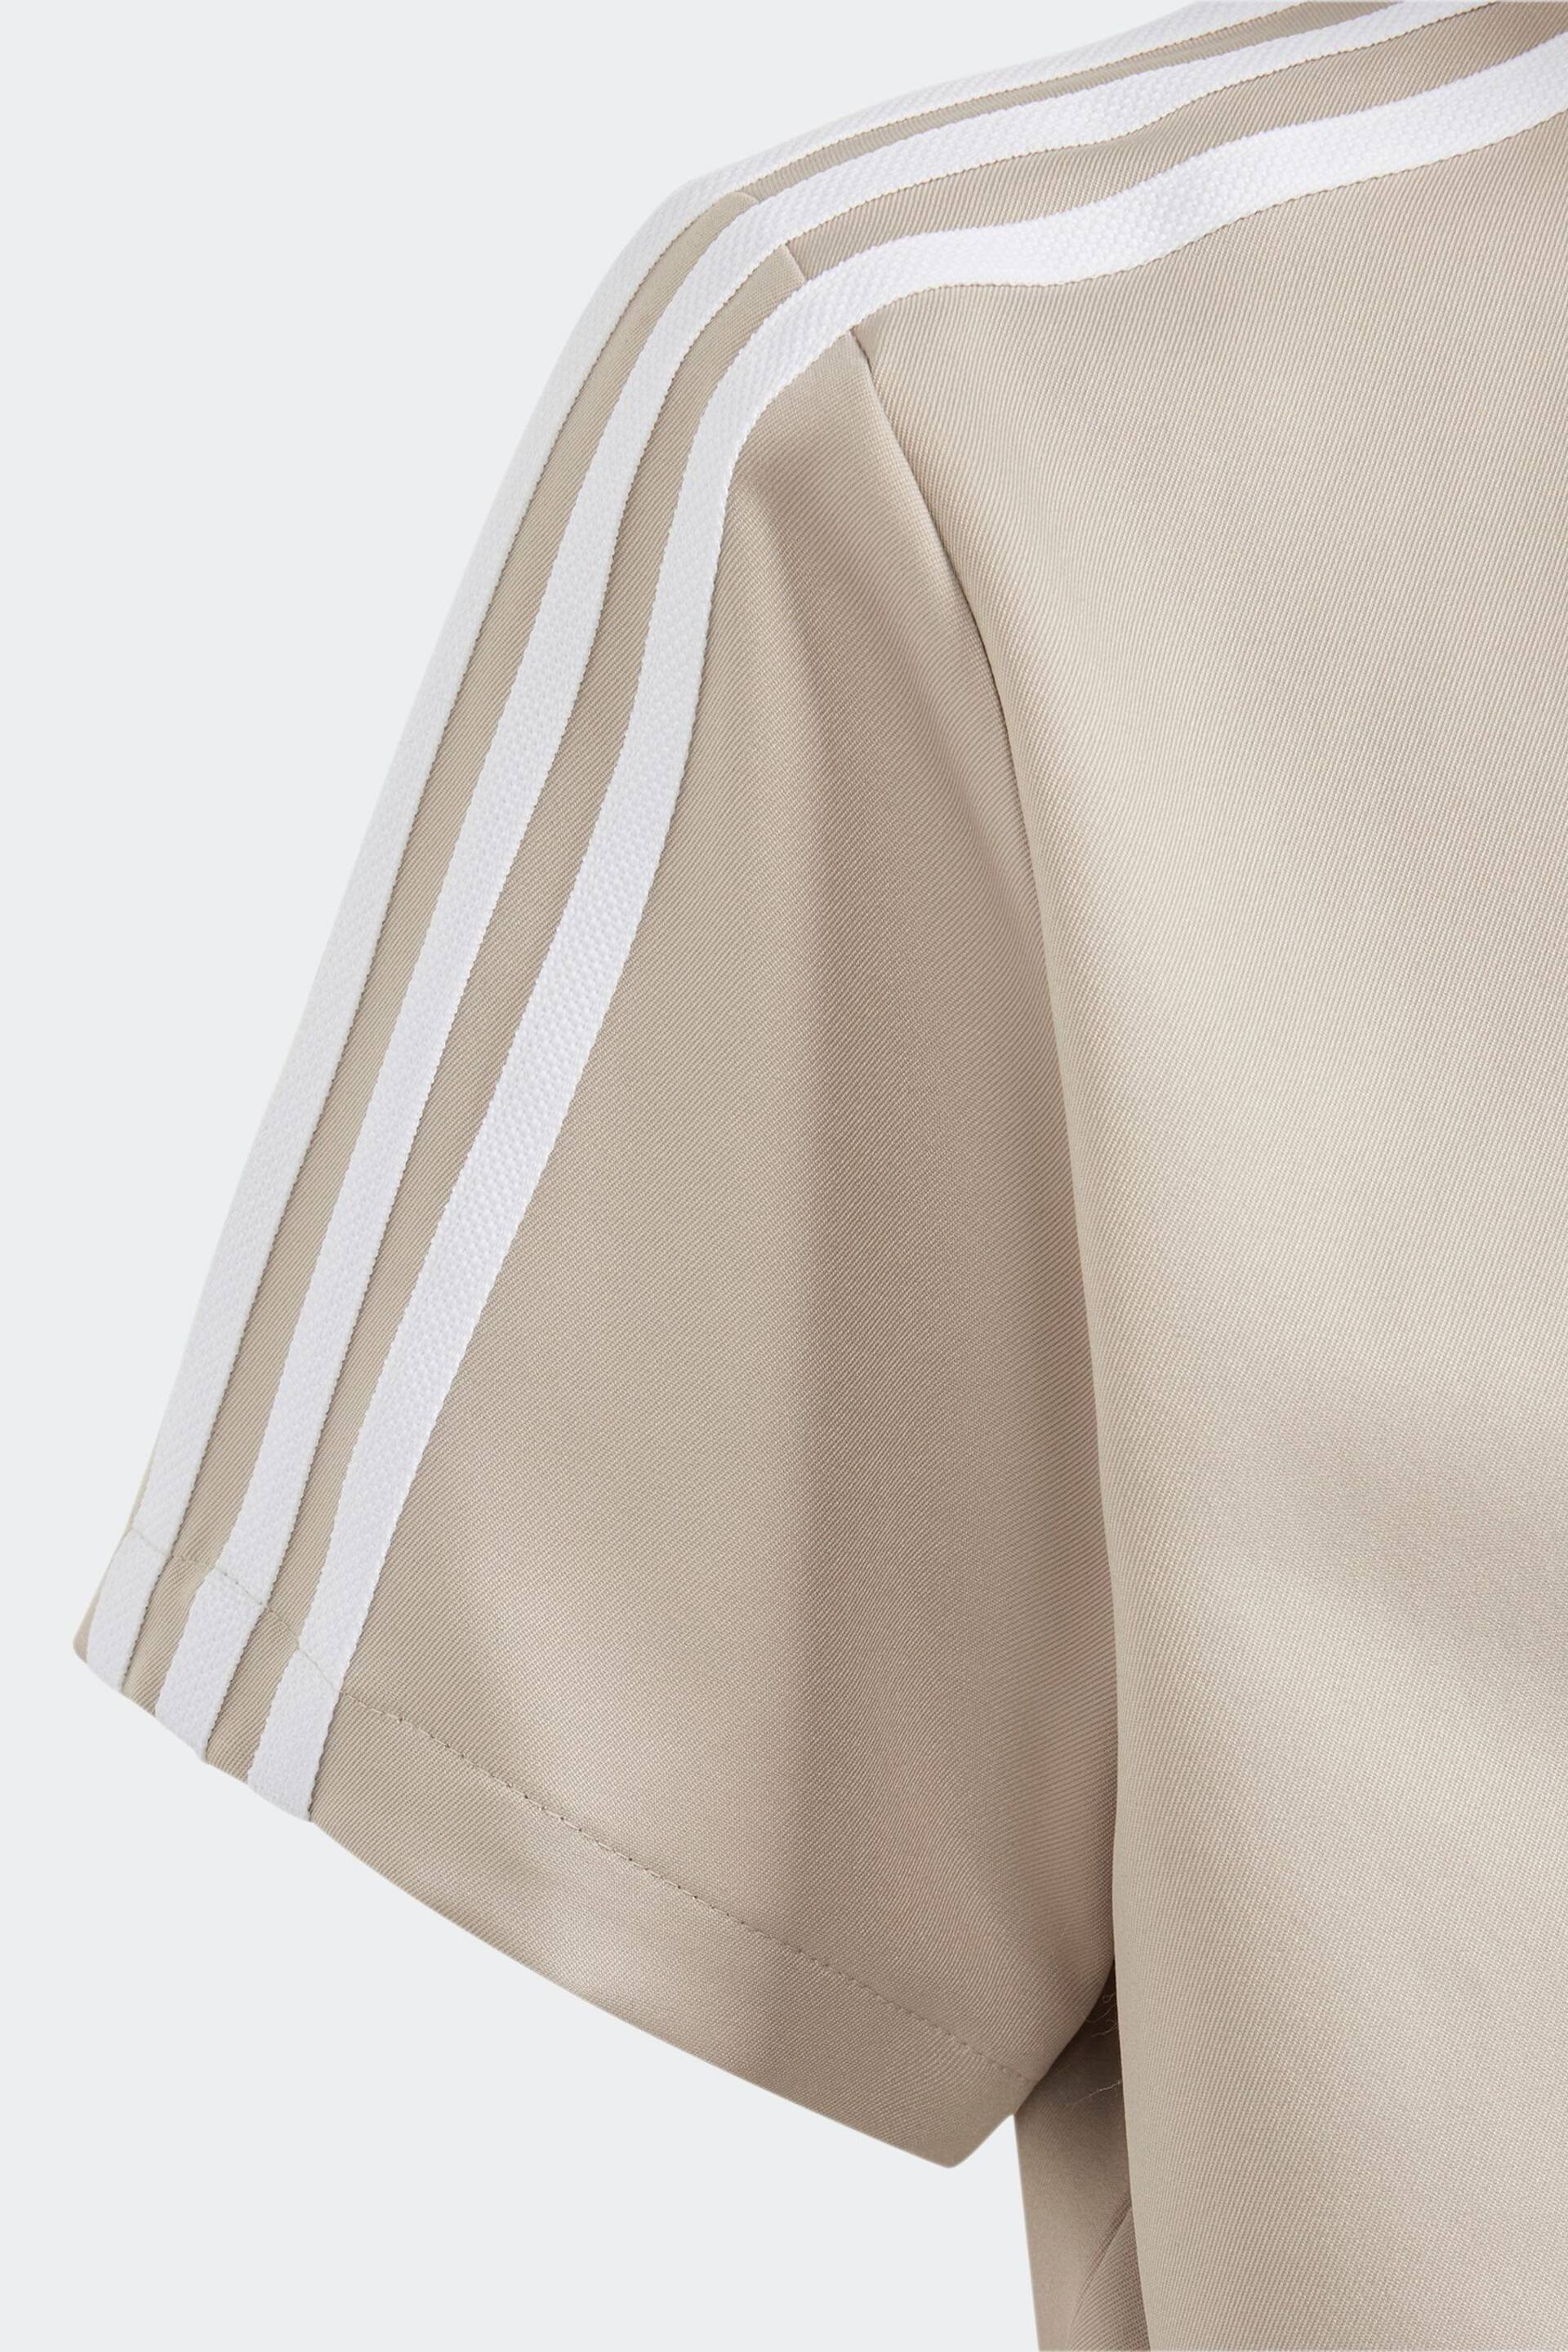 adidas Originals Beige Adicolor Short Sleeve Jumpsuit - Image 6 of 6